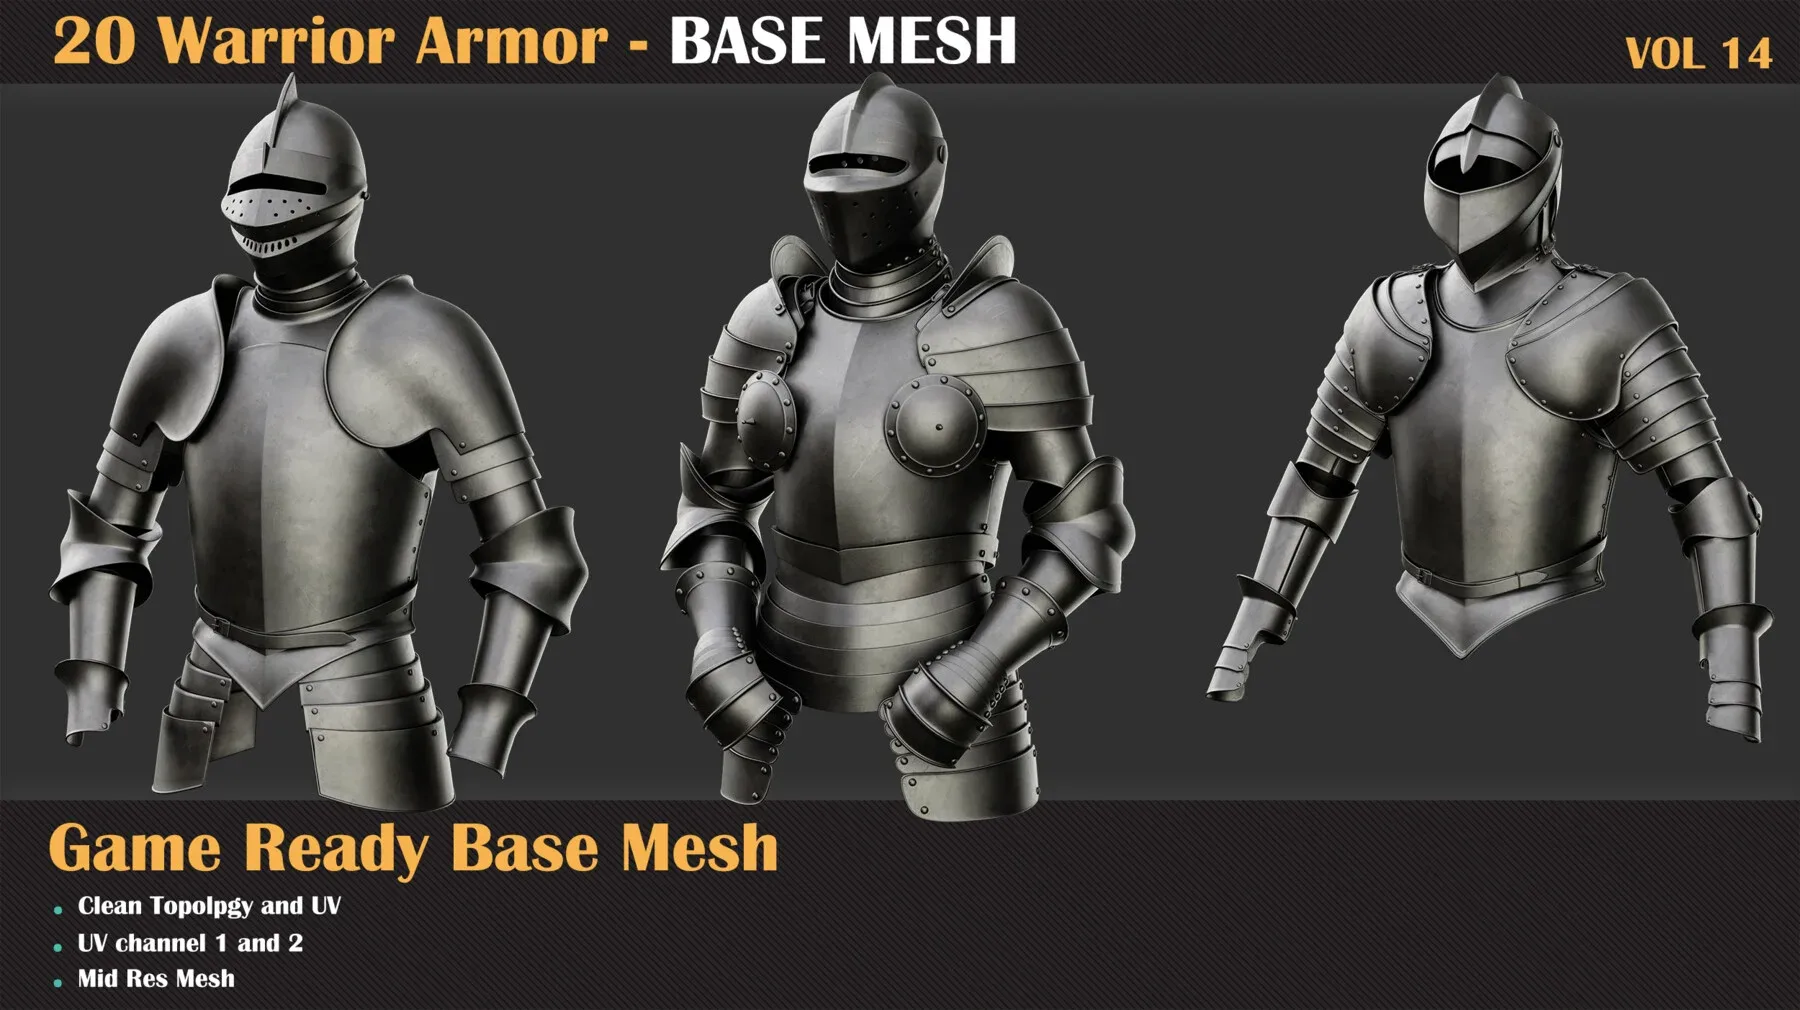 20 Warrior Armor BASE MESH - VOL 14